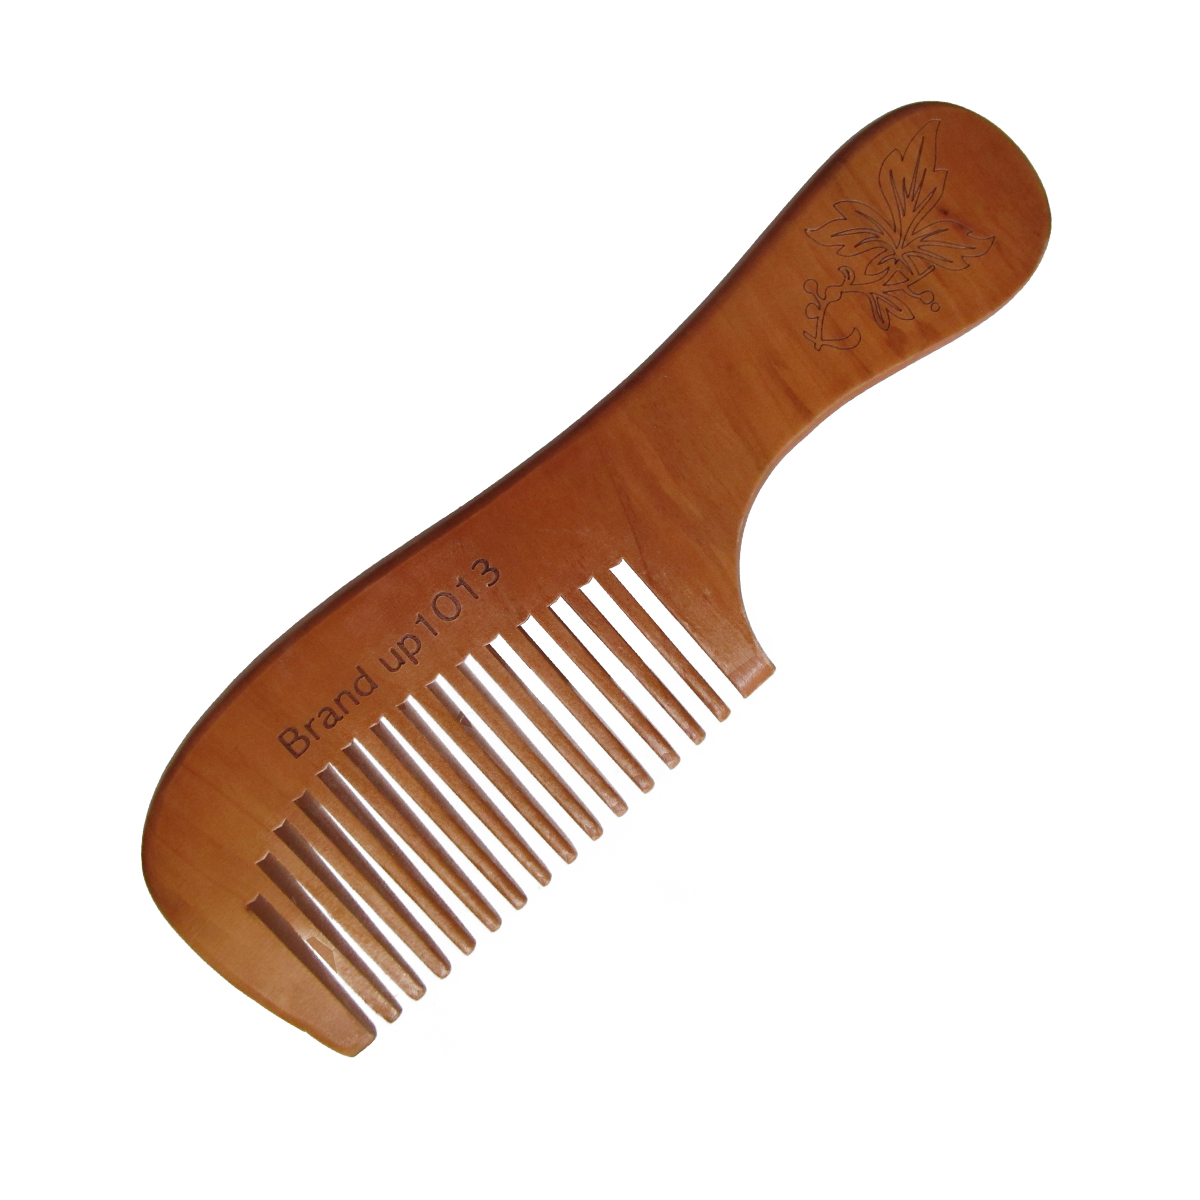 شانه مو برندآپ مدل چوبی 1013